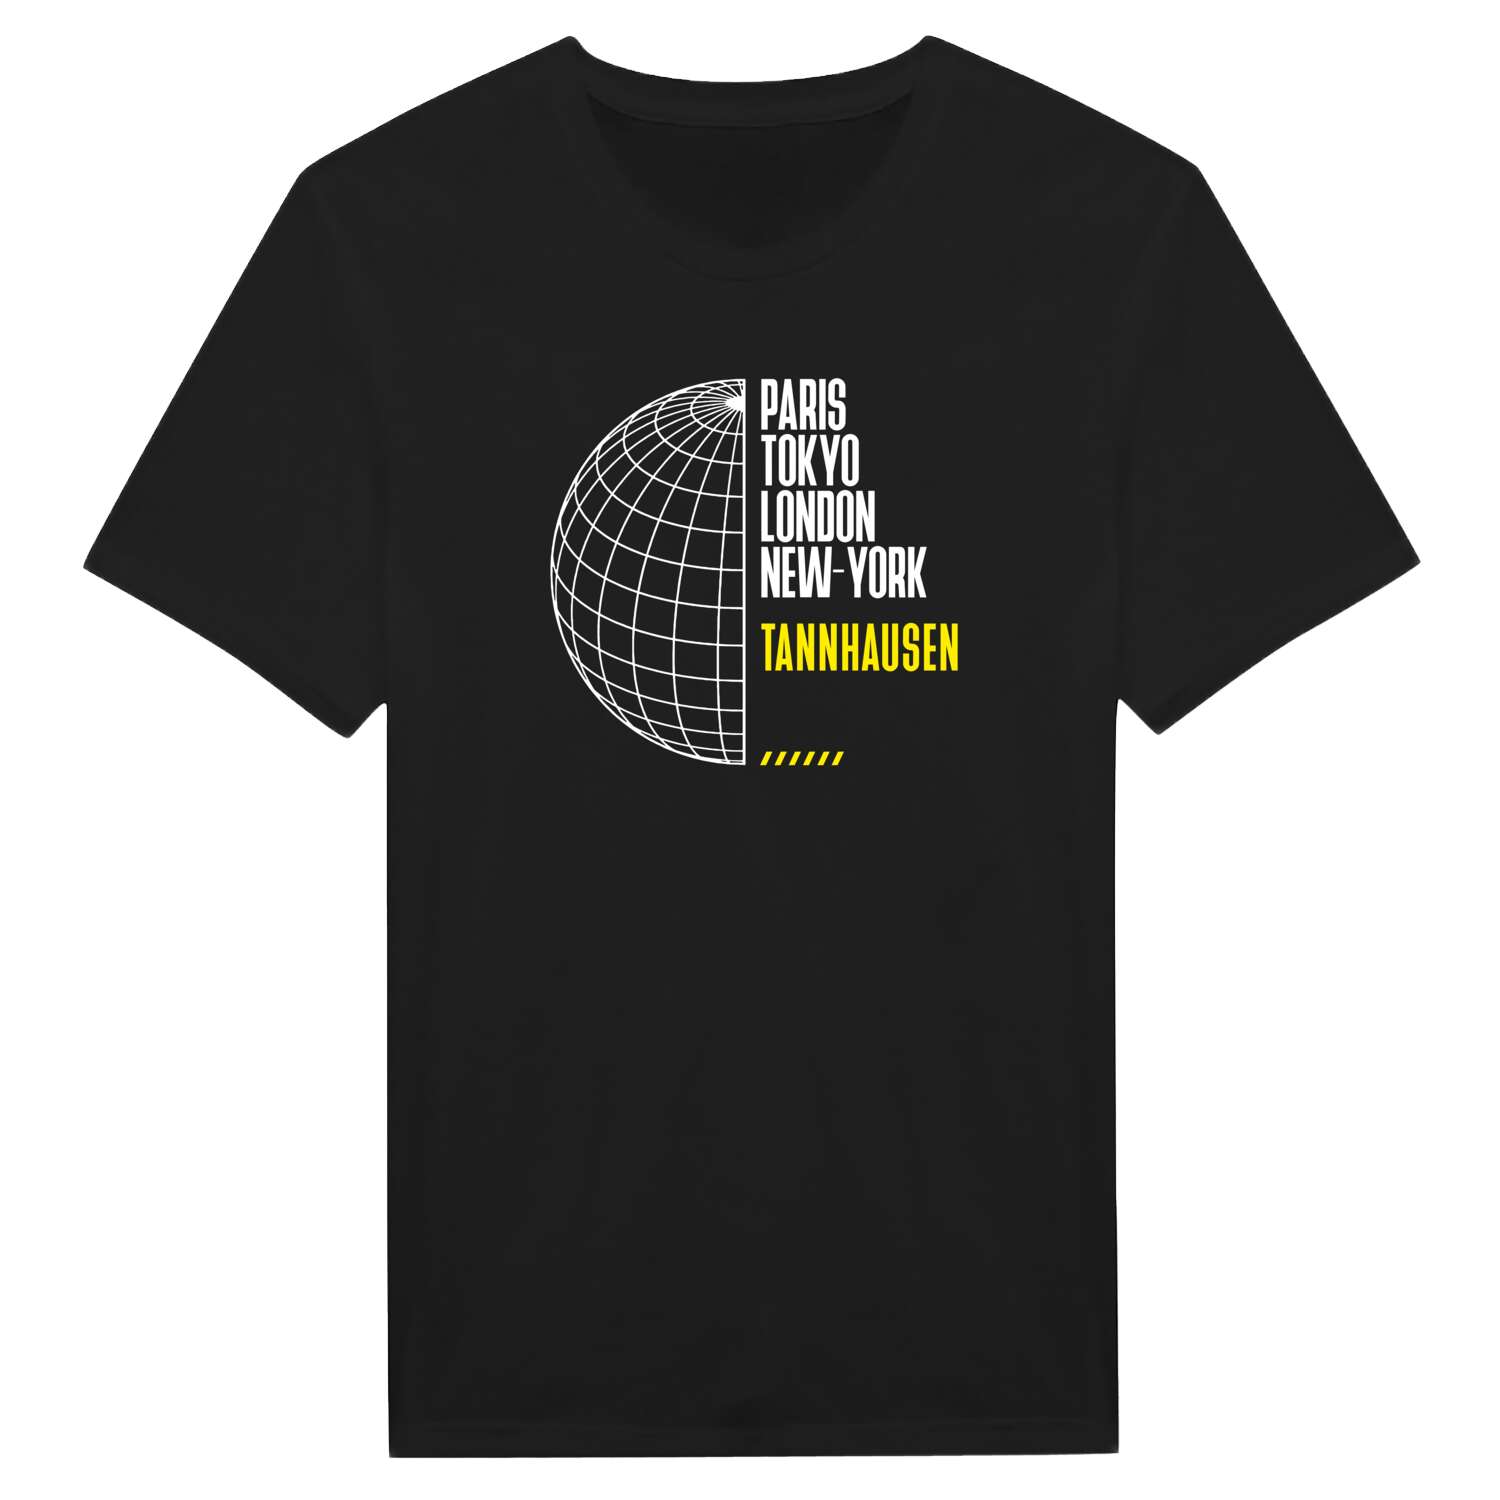 Tannhausen T-Shirt »Paris Tokyo London«